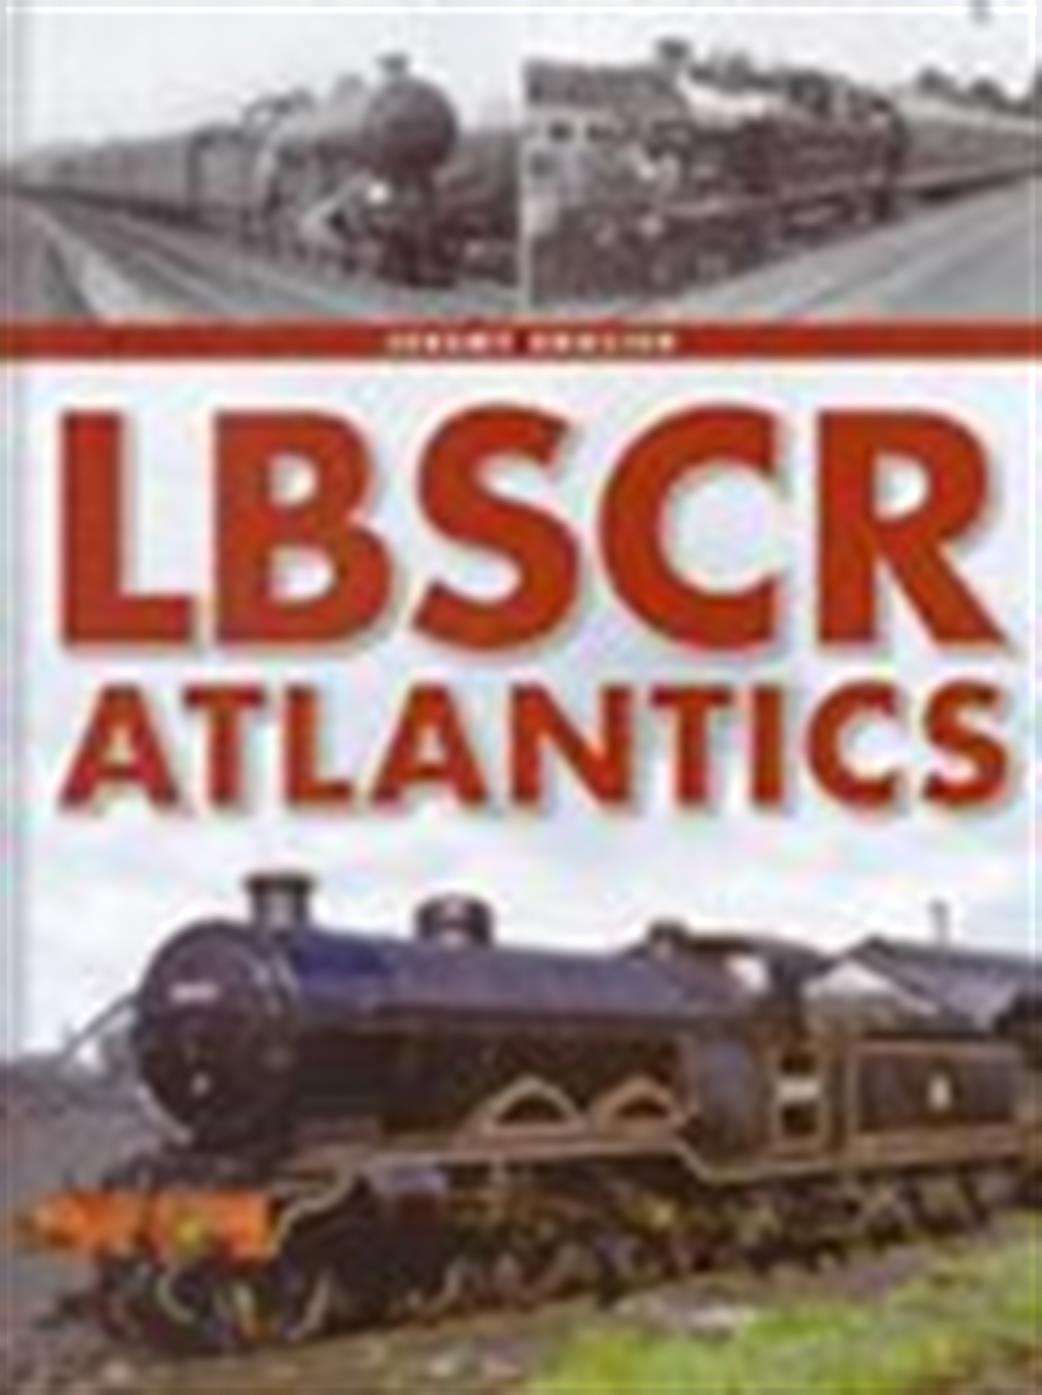 Ian Allan Publishing  9780711037915 LBSCR Atlantics by Jeremy English